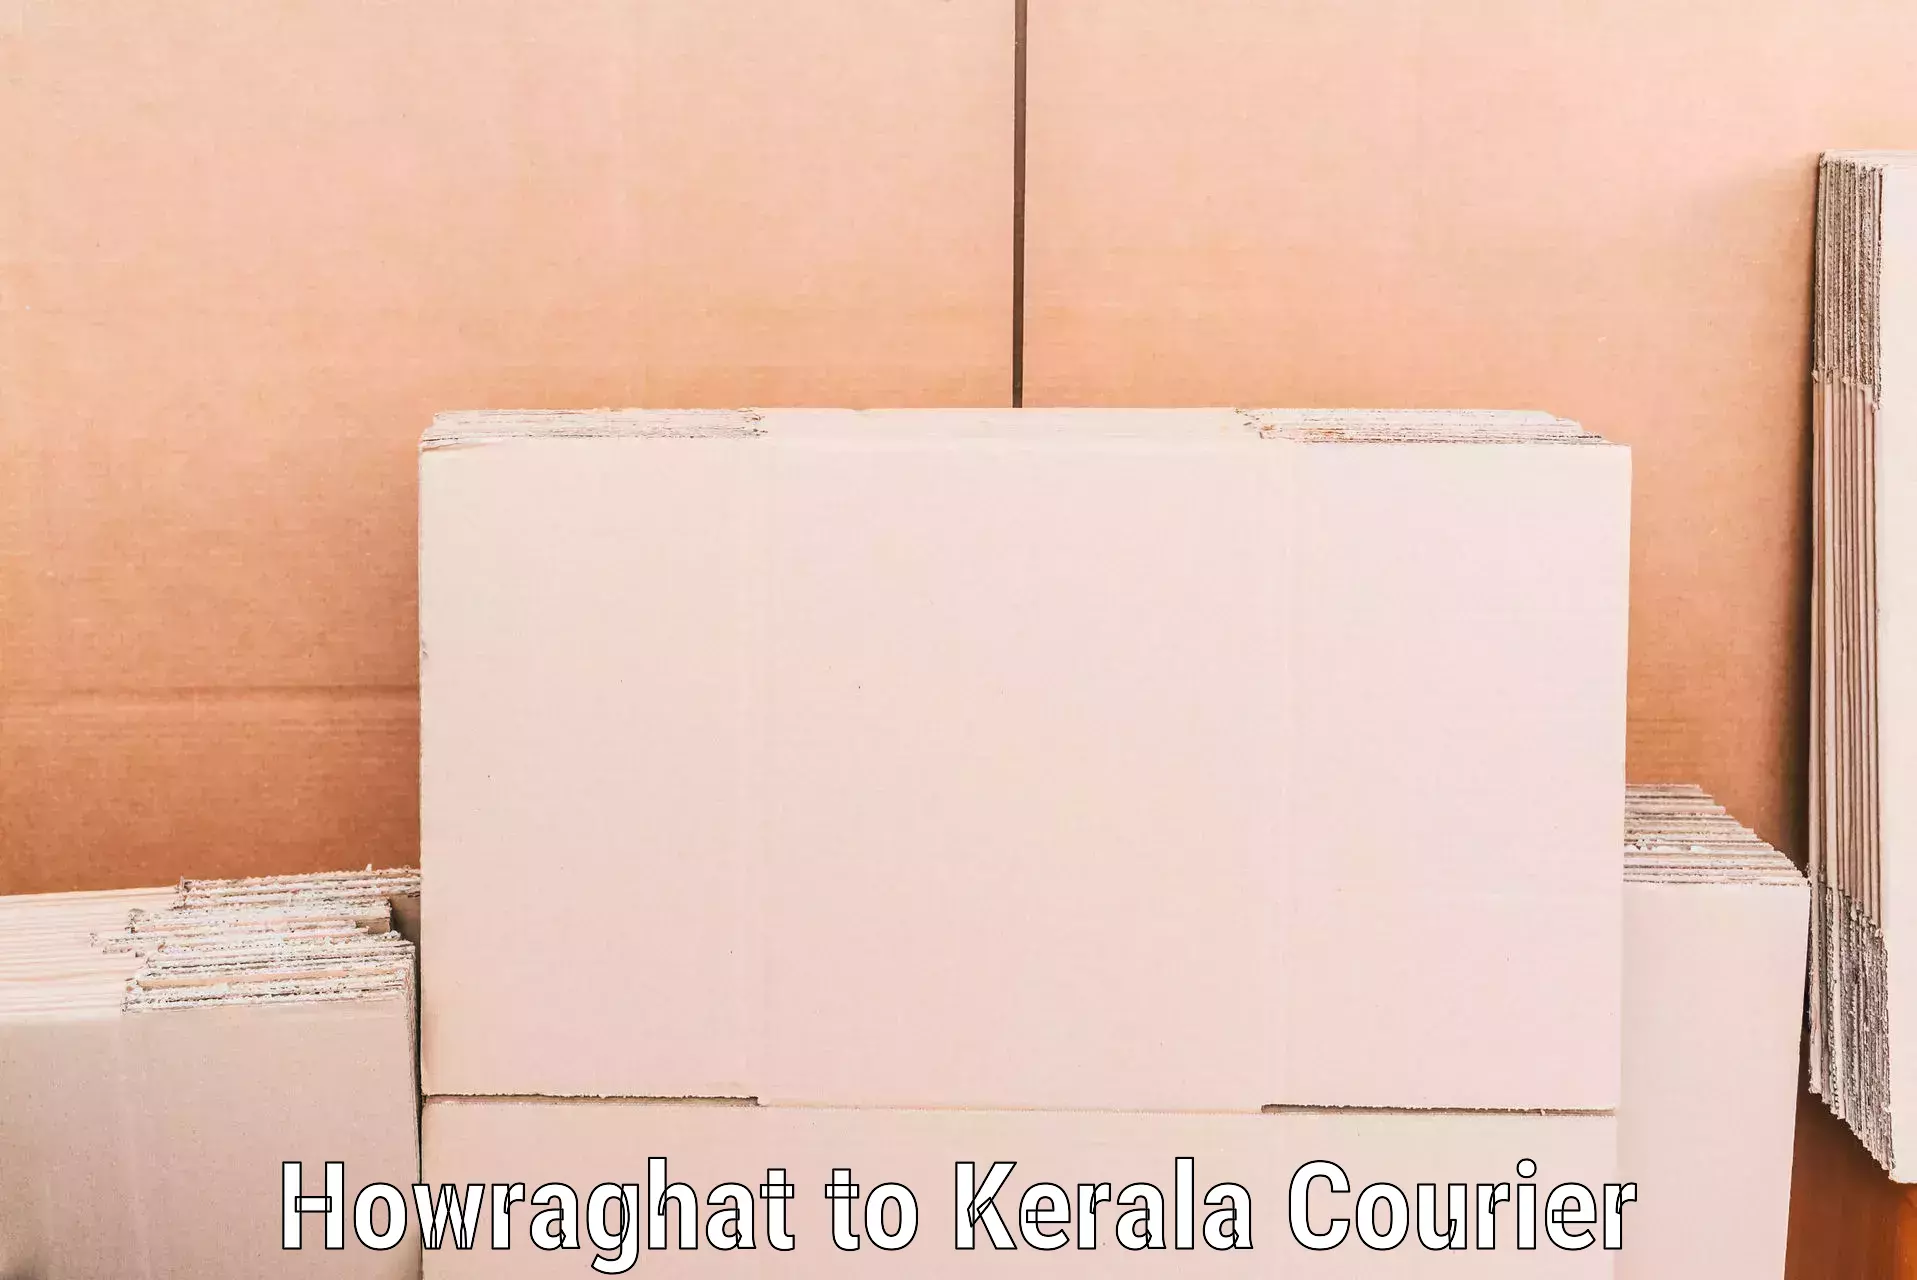 Professional moving company Howraghat to Cochin Port Kochi